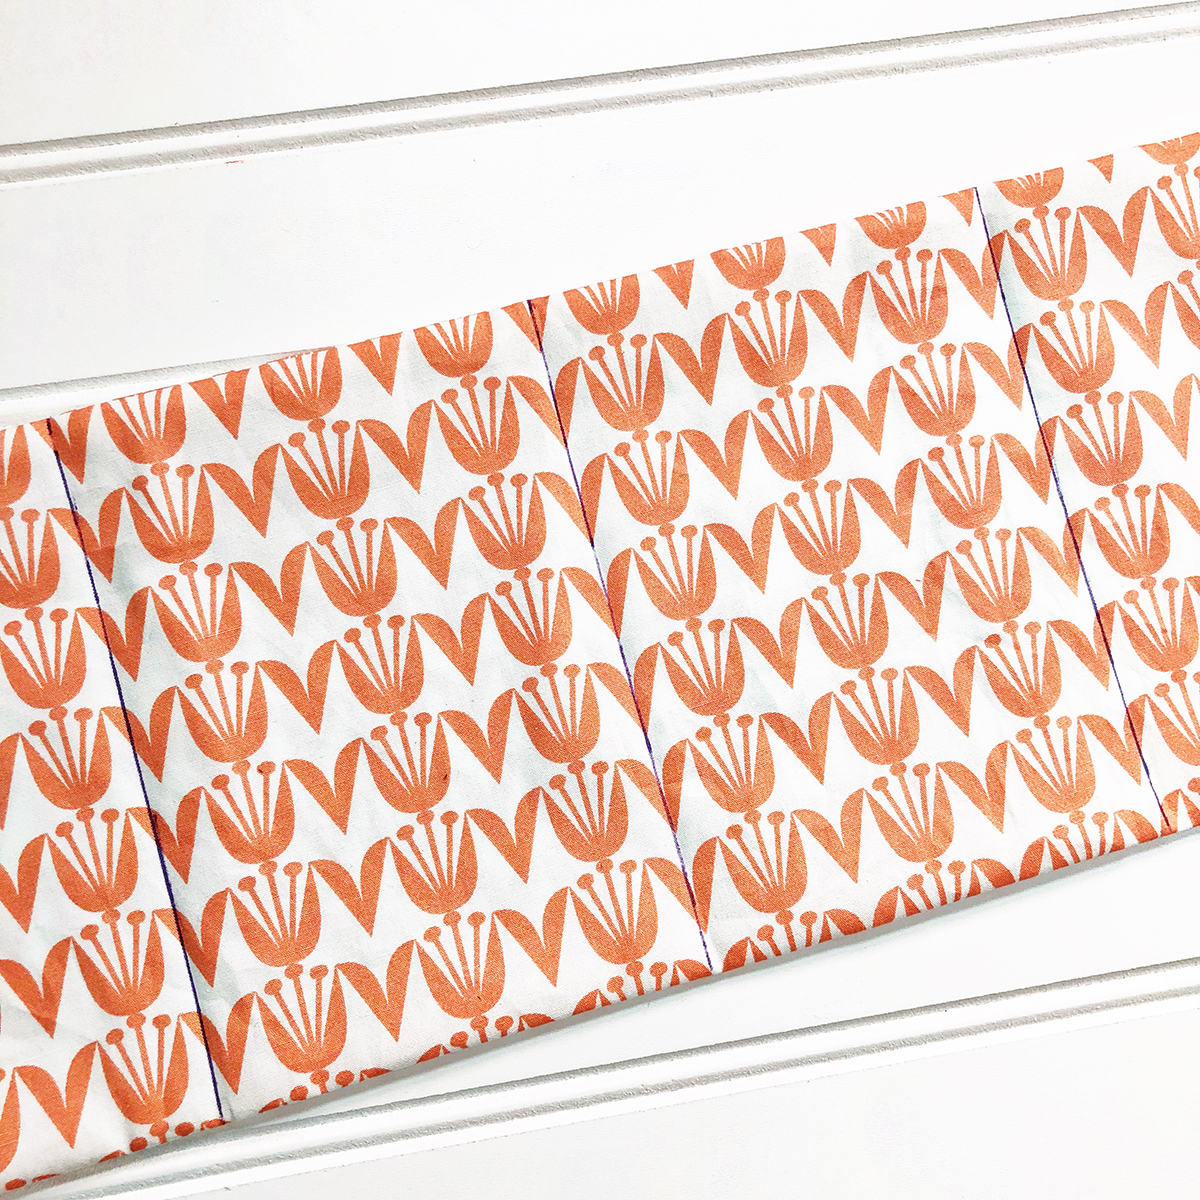 Handmade Heating-Cooling Pad Tutorial: Marking the fabric